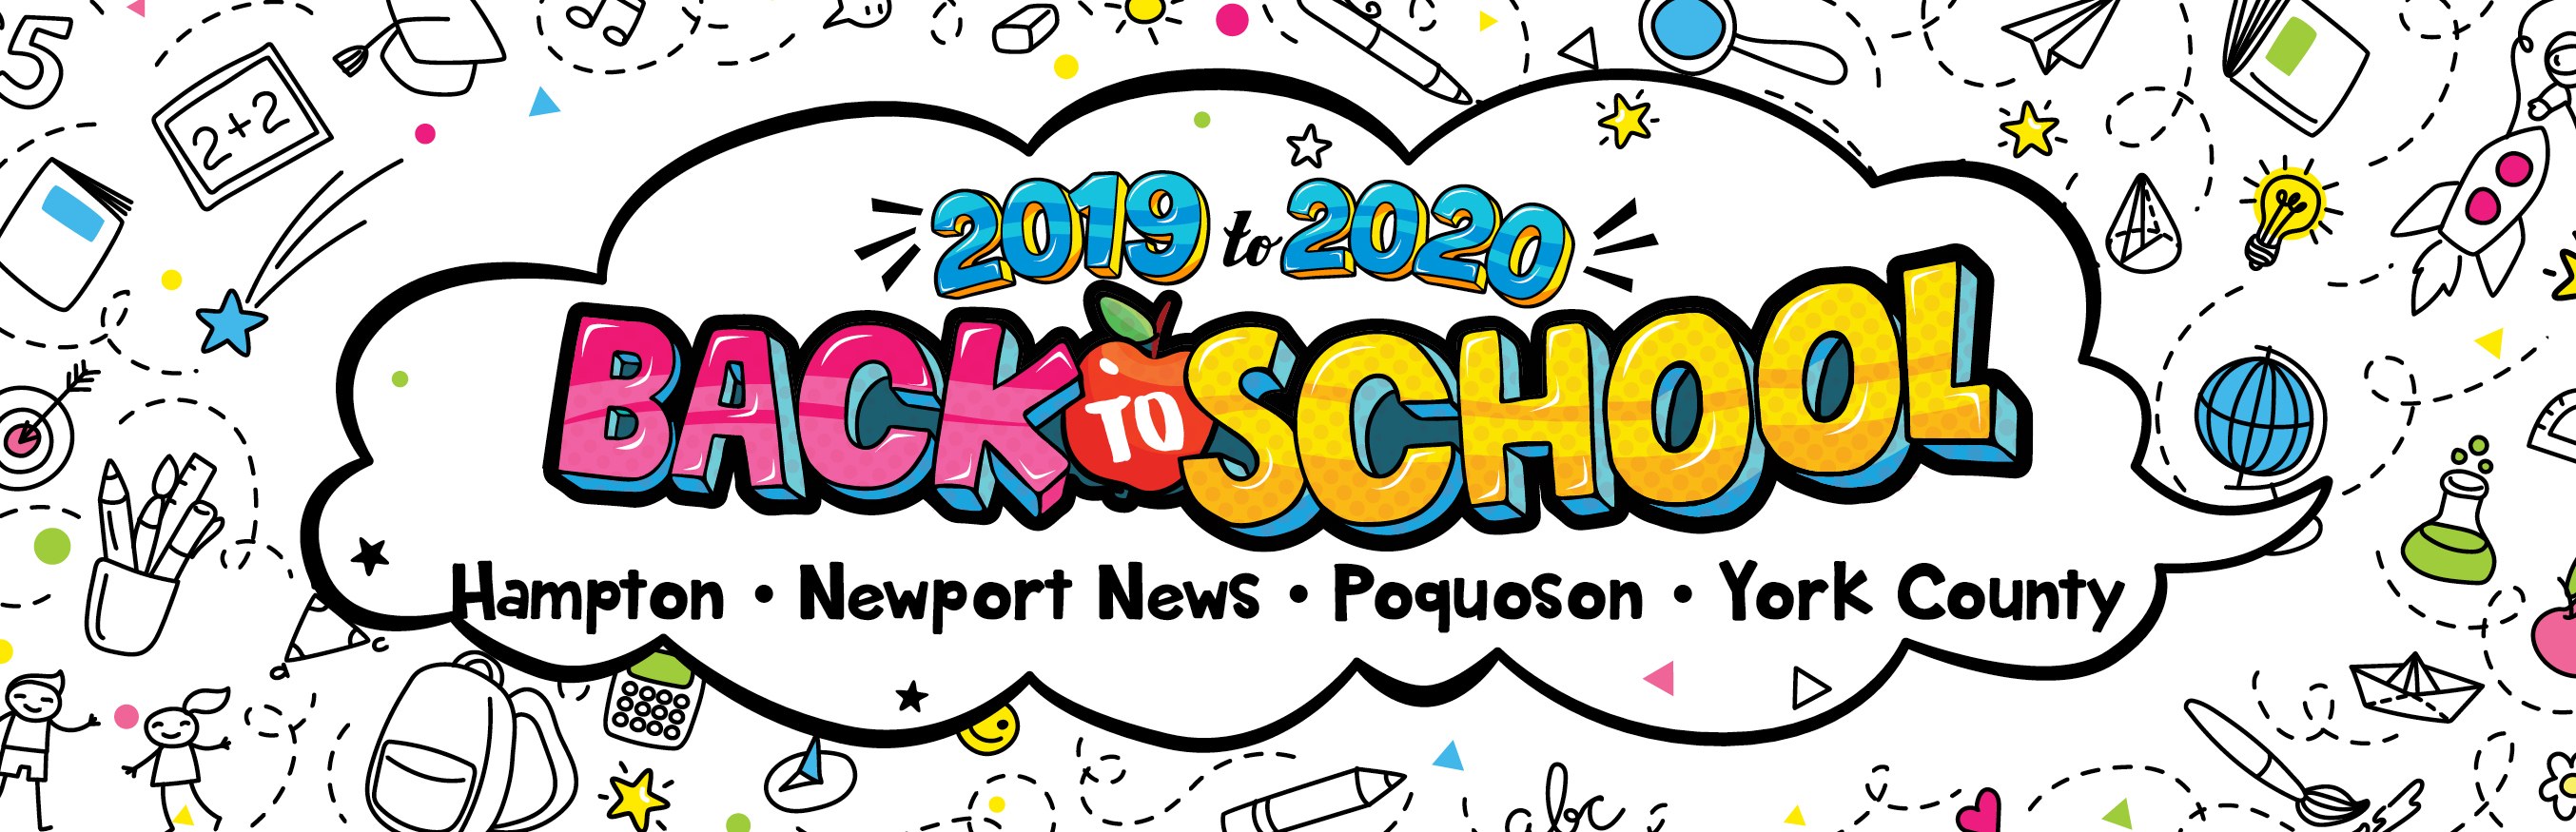 20192020 School Calendar Hampton, Newport News, Poquoson, York County